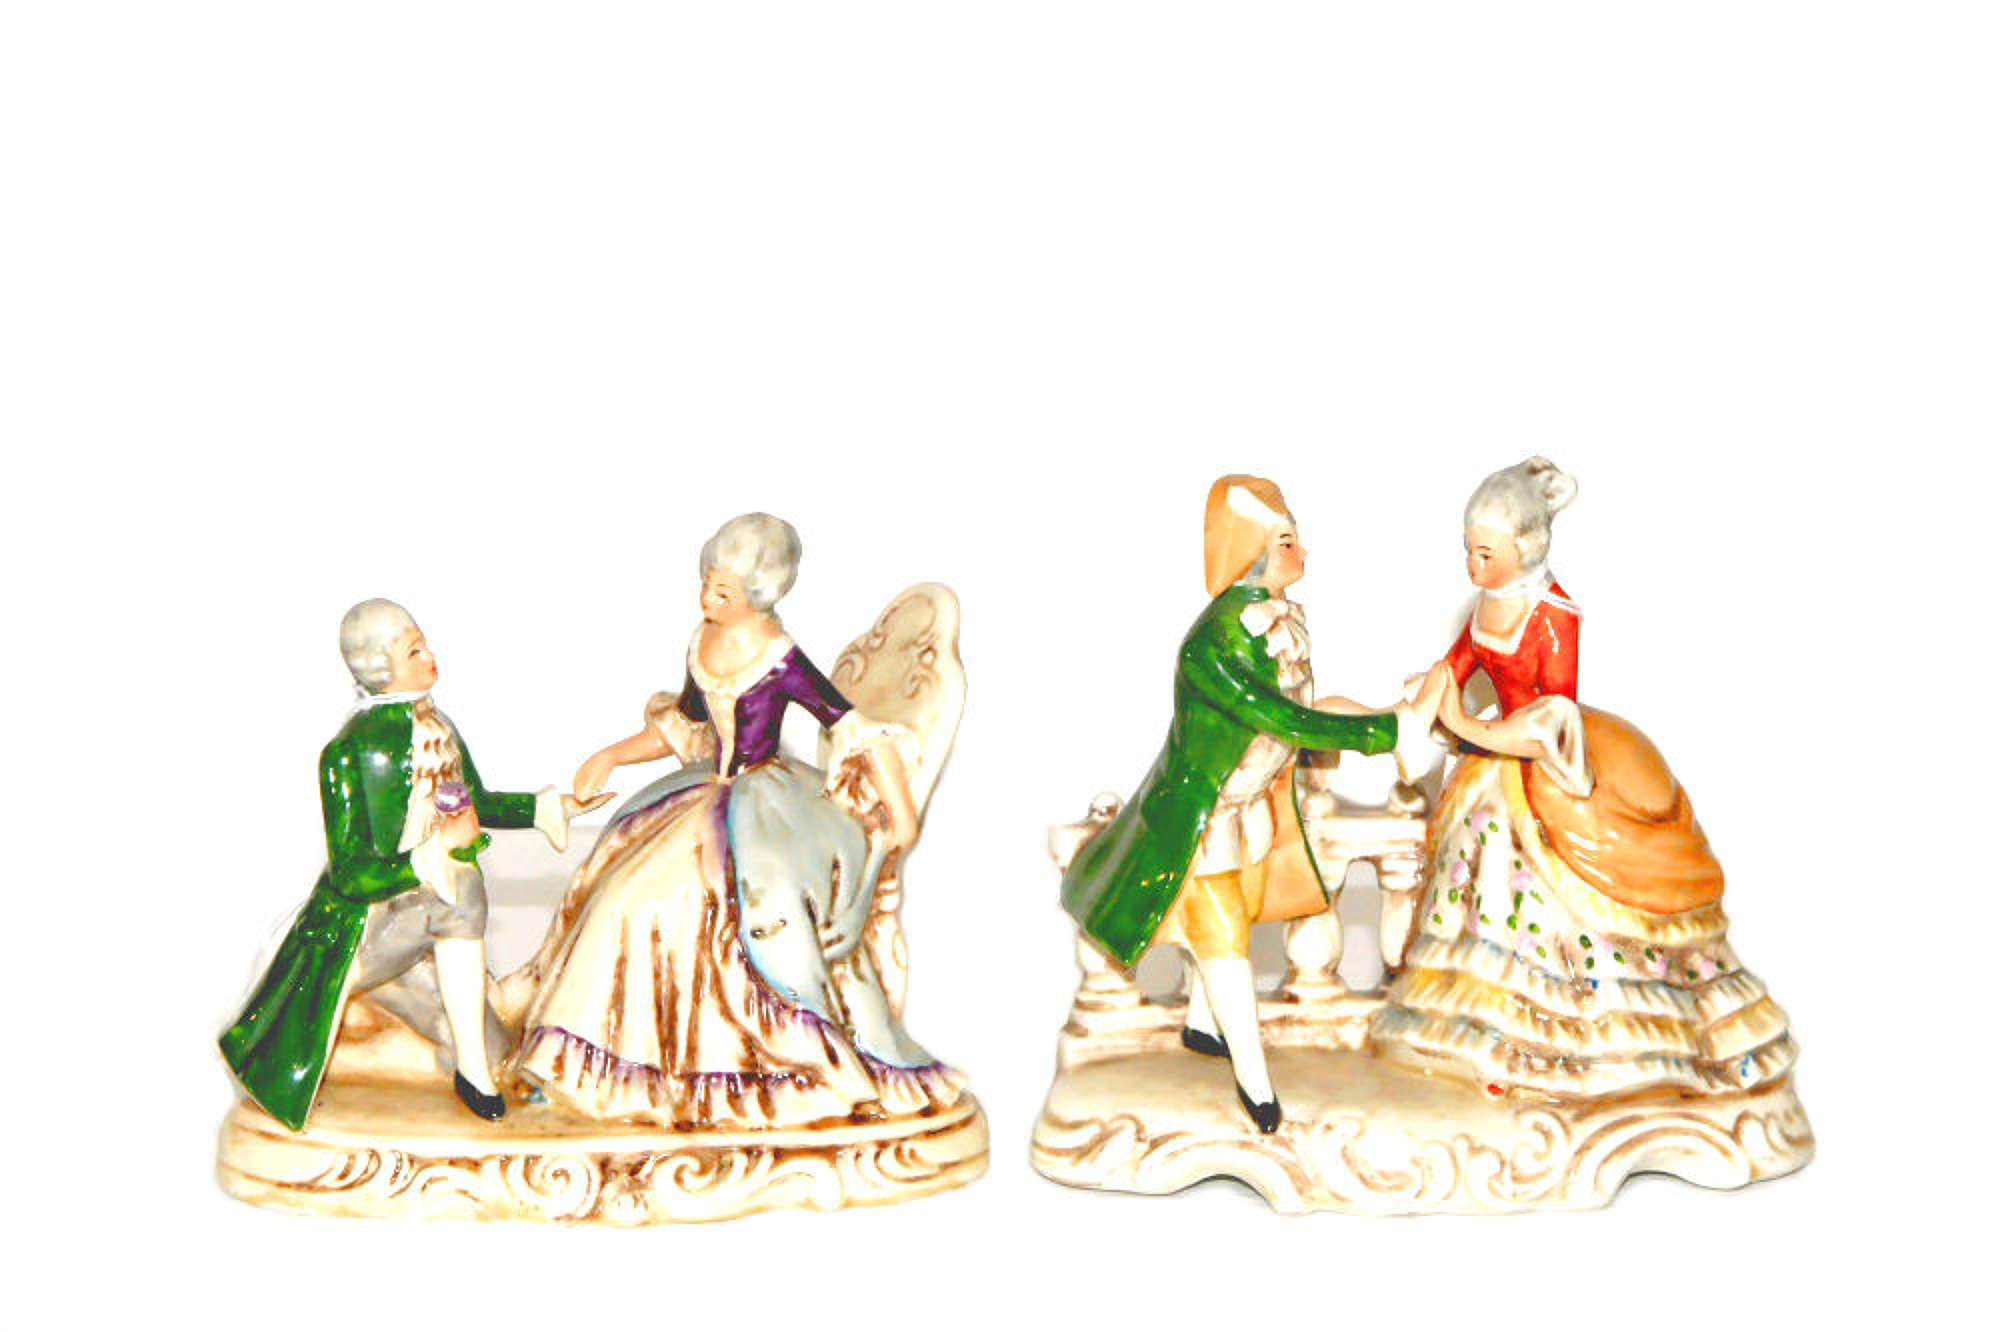 German Porcelain Figures (1920s /30s )